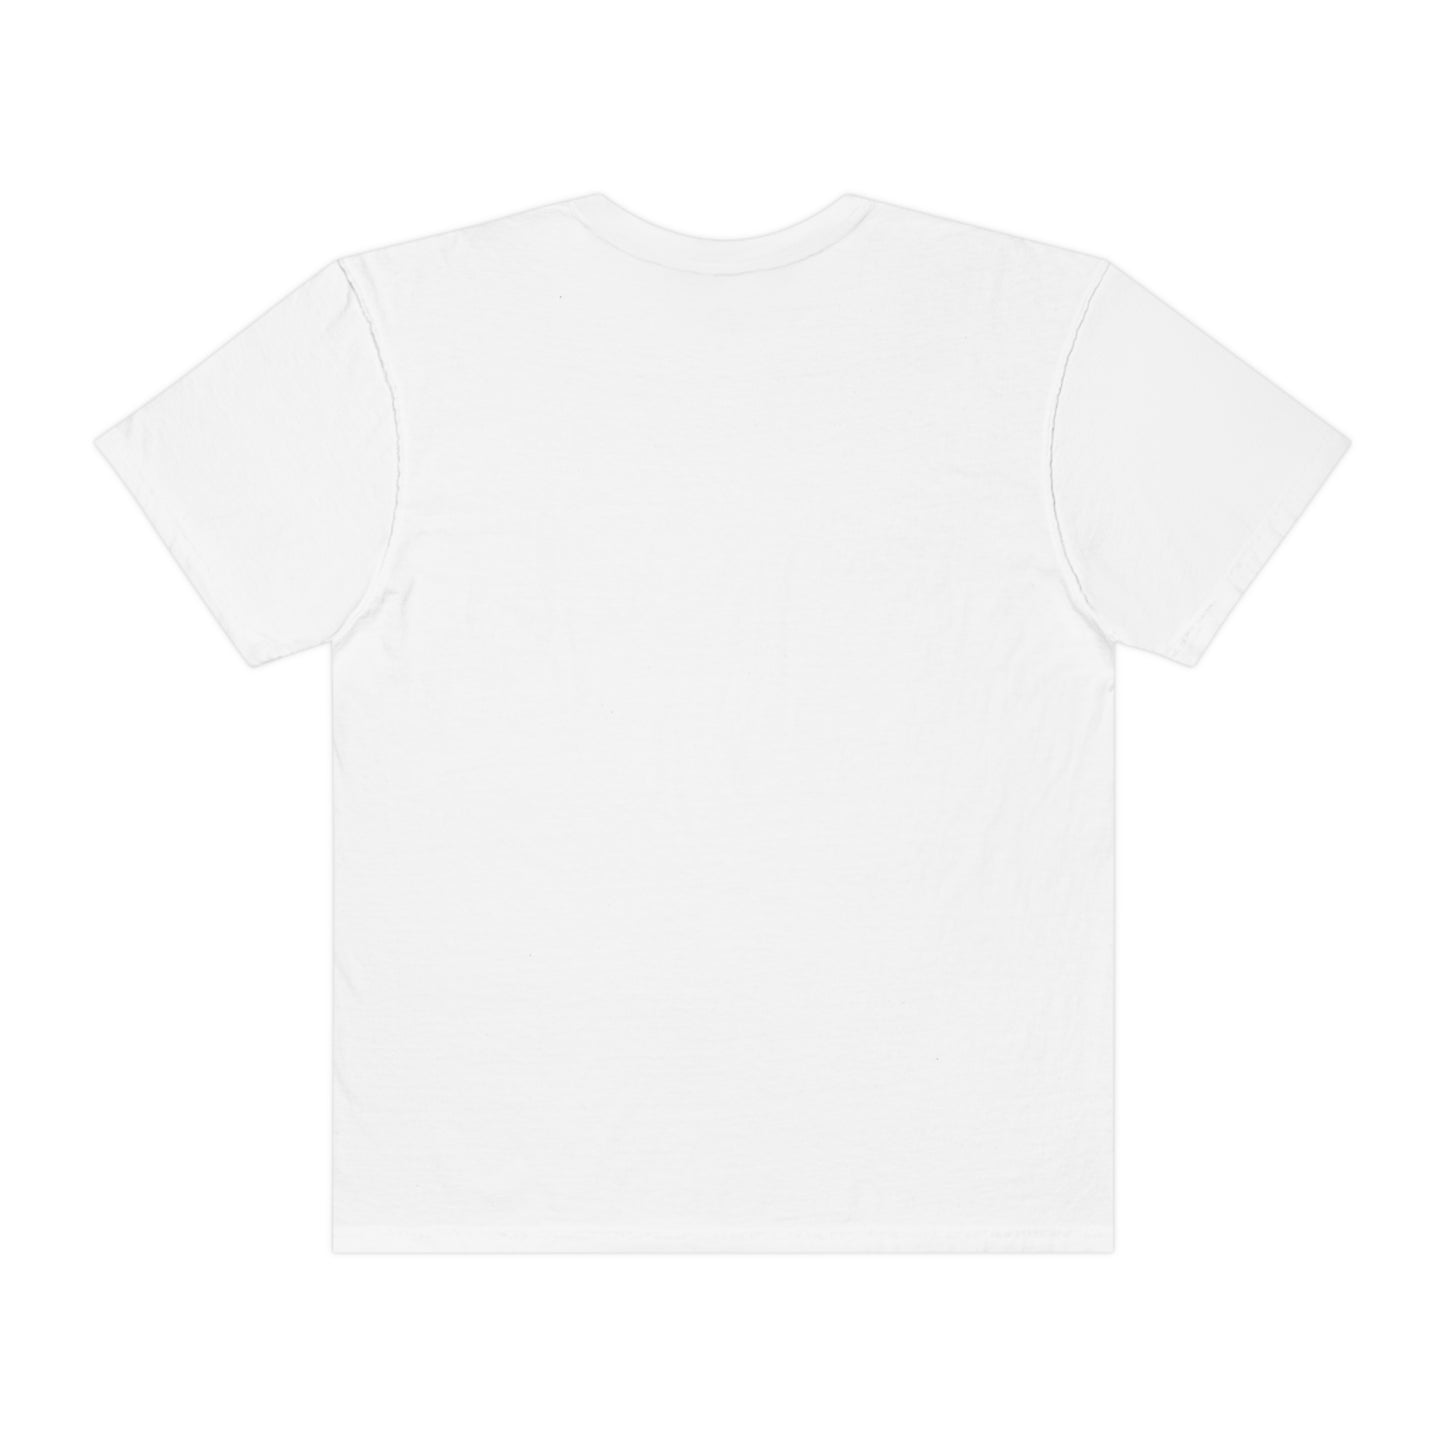 Pick Up Line T-shirt